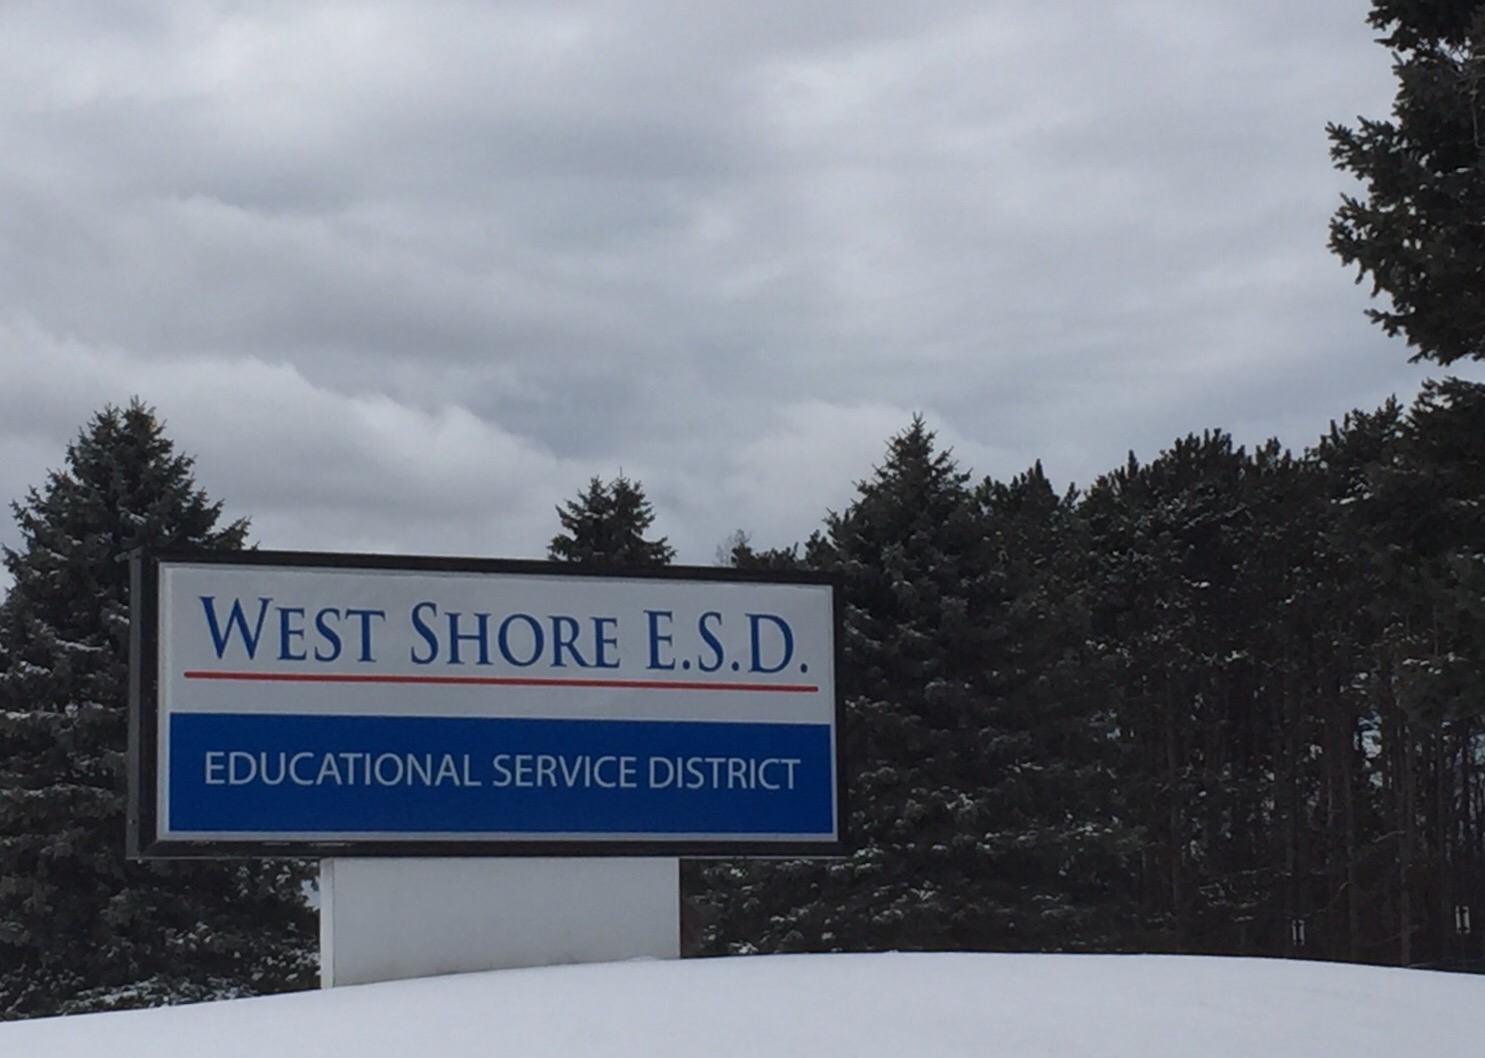 School superintendents raise concerns over CTE location changes.